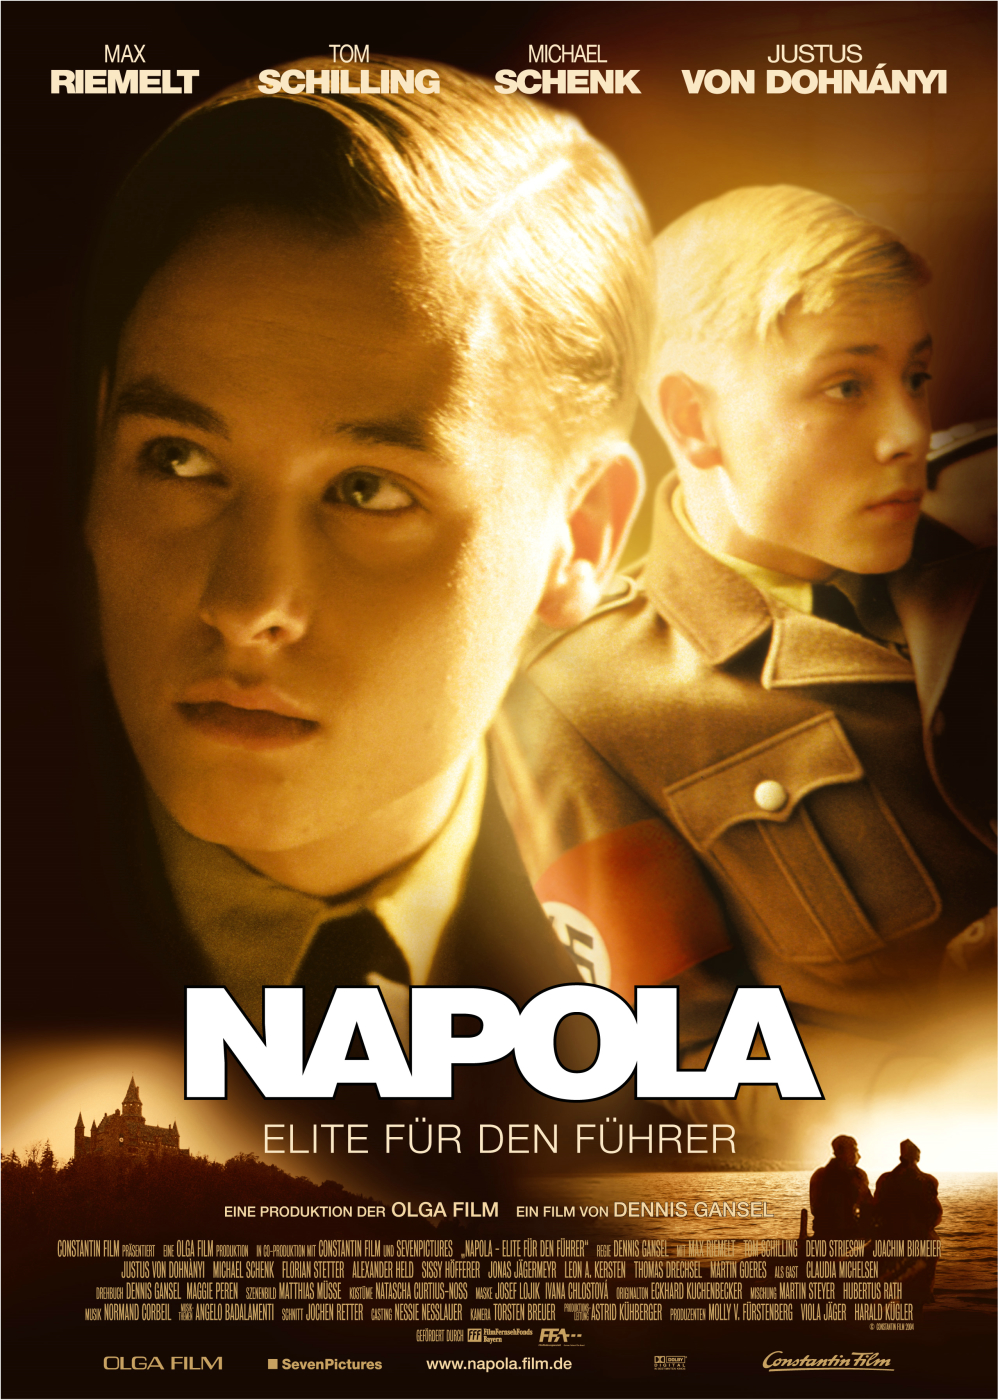 Napola Olga Film Kino Max Riemelt Dennis Gansel Constantin Film